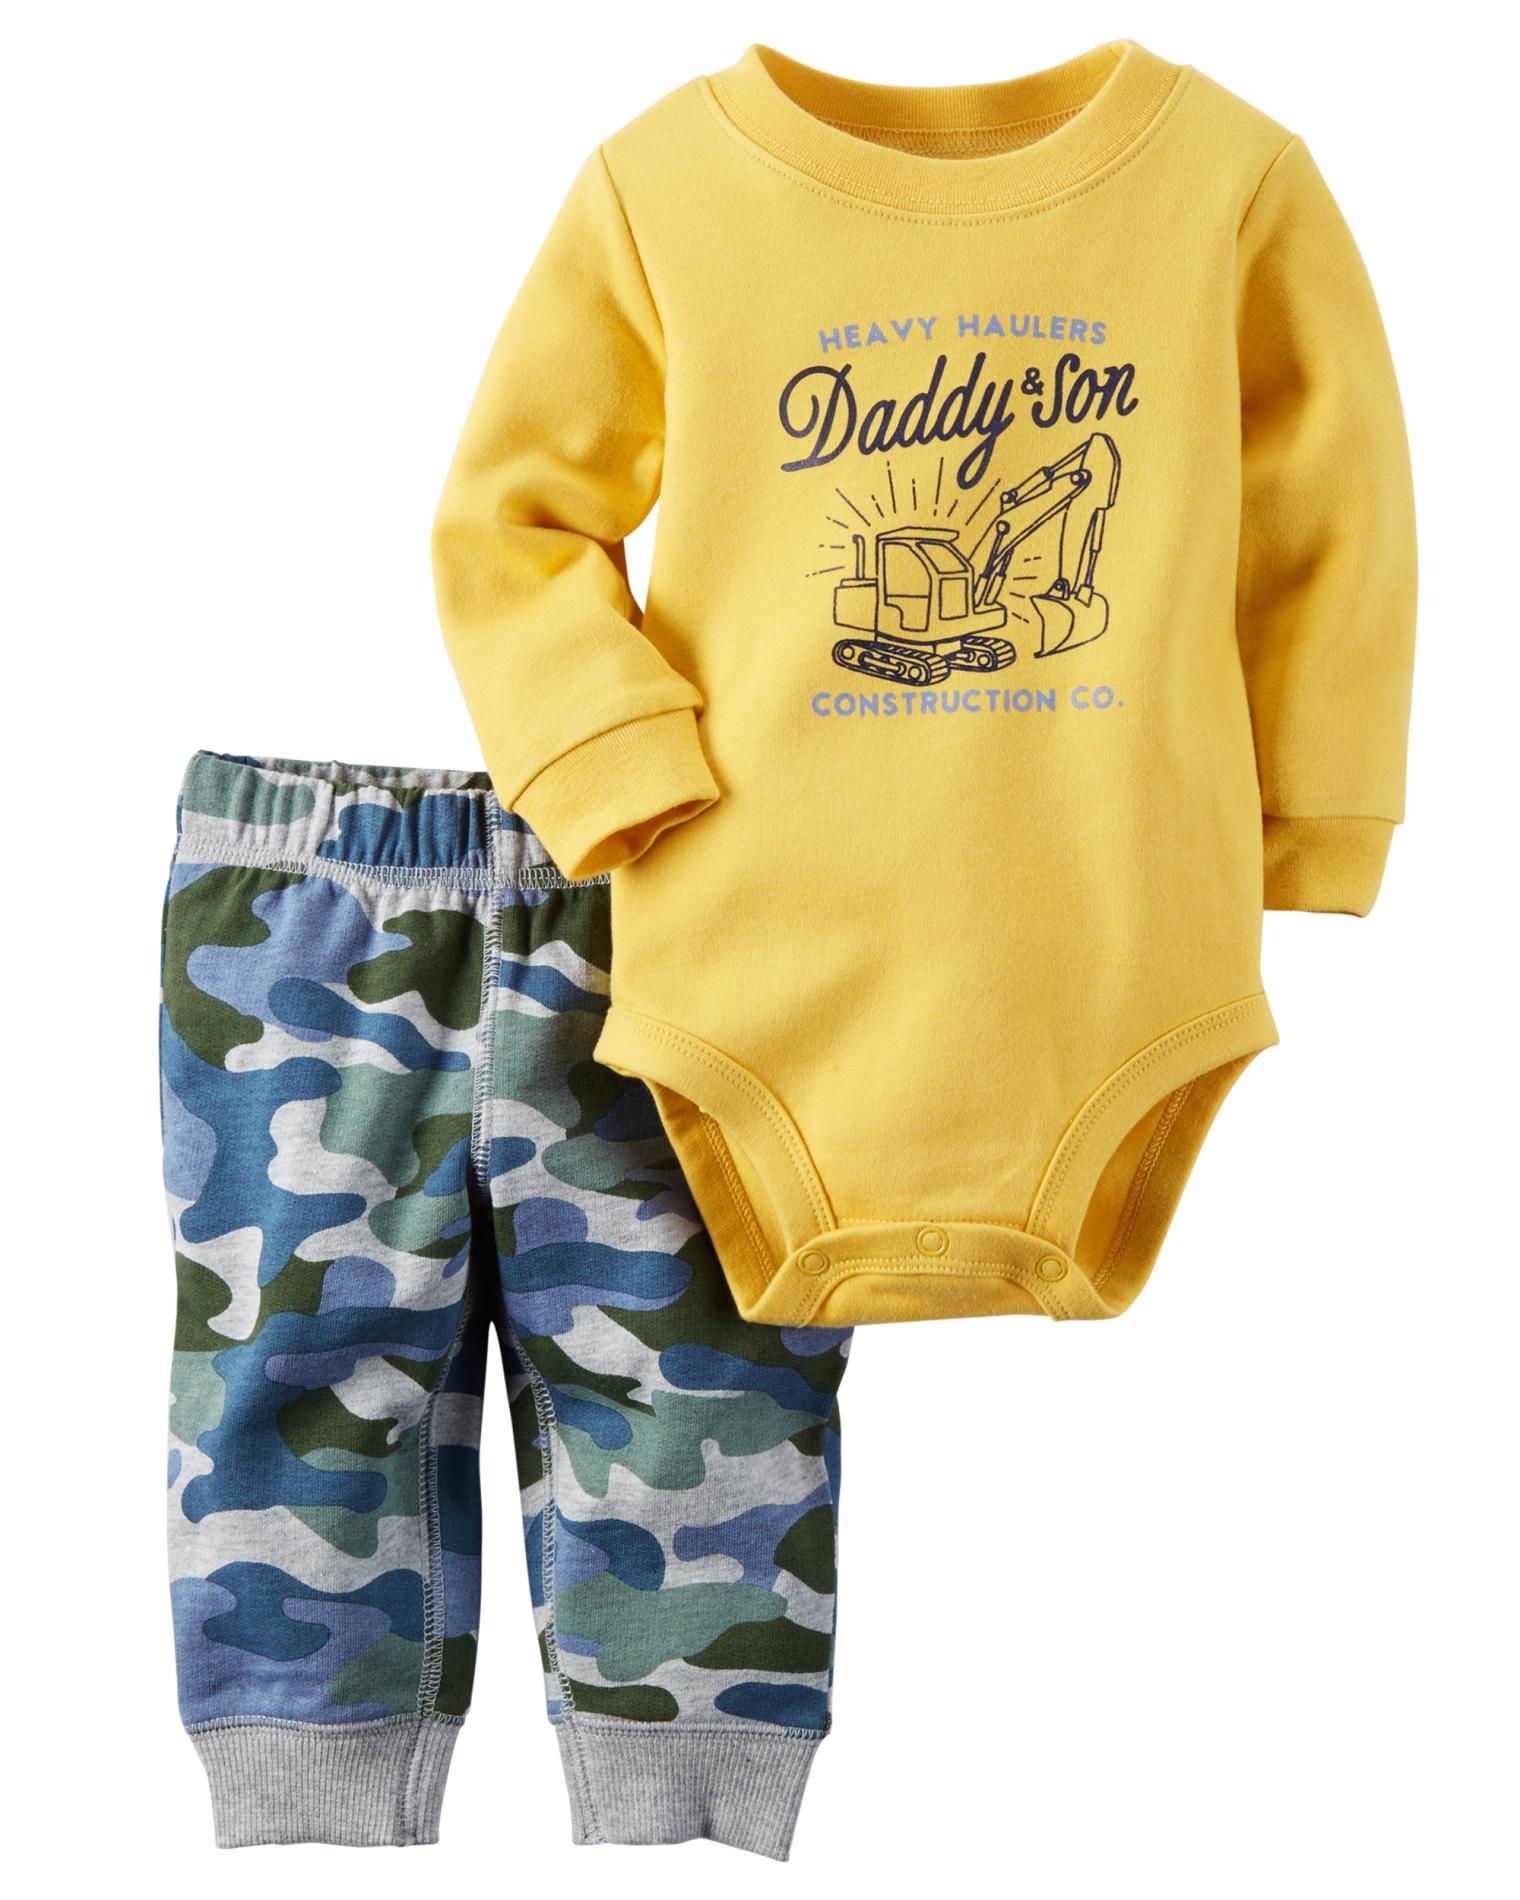 Carter's Newborn & Infant Boys' Bodysuit & Pants - Daddy & Son Construction